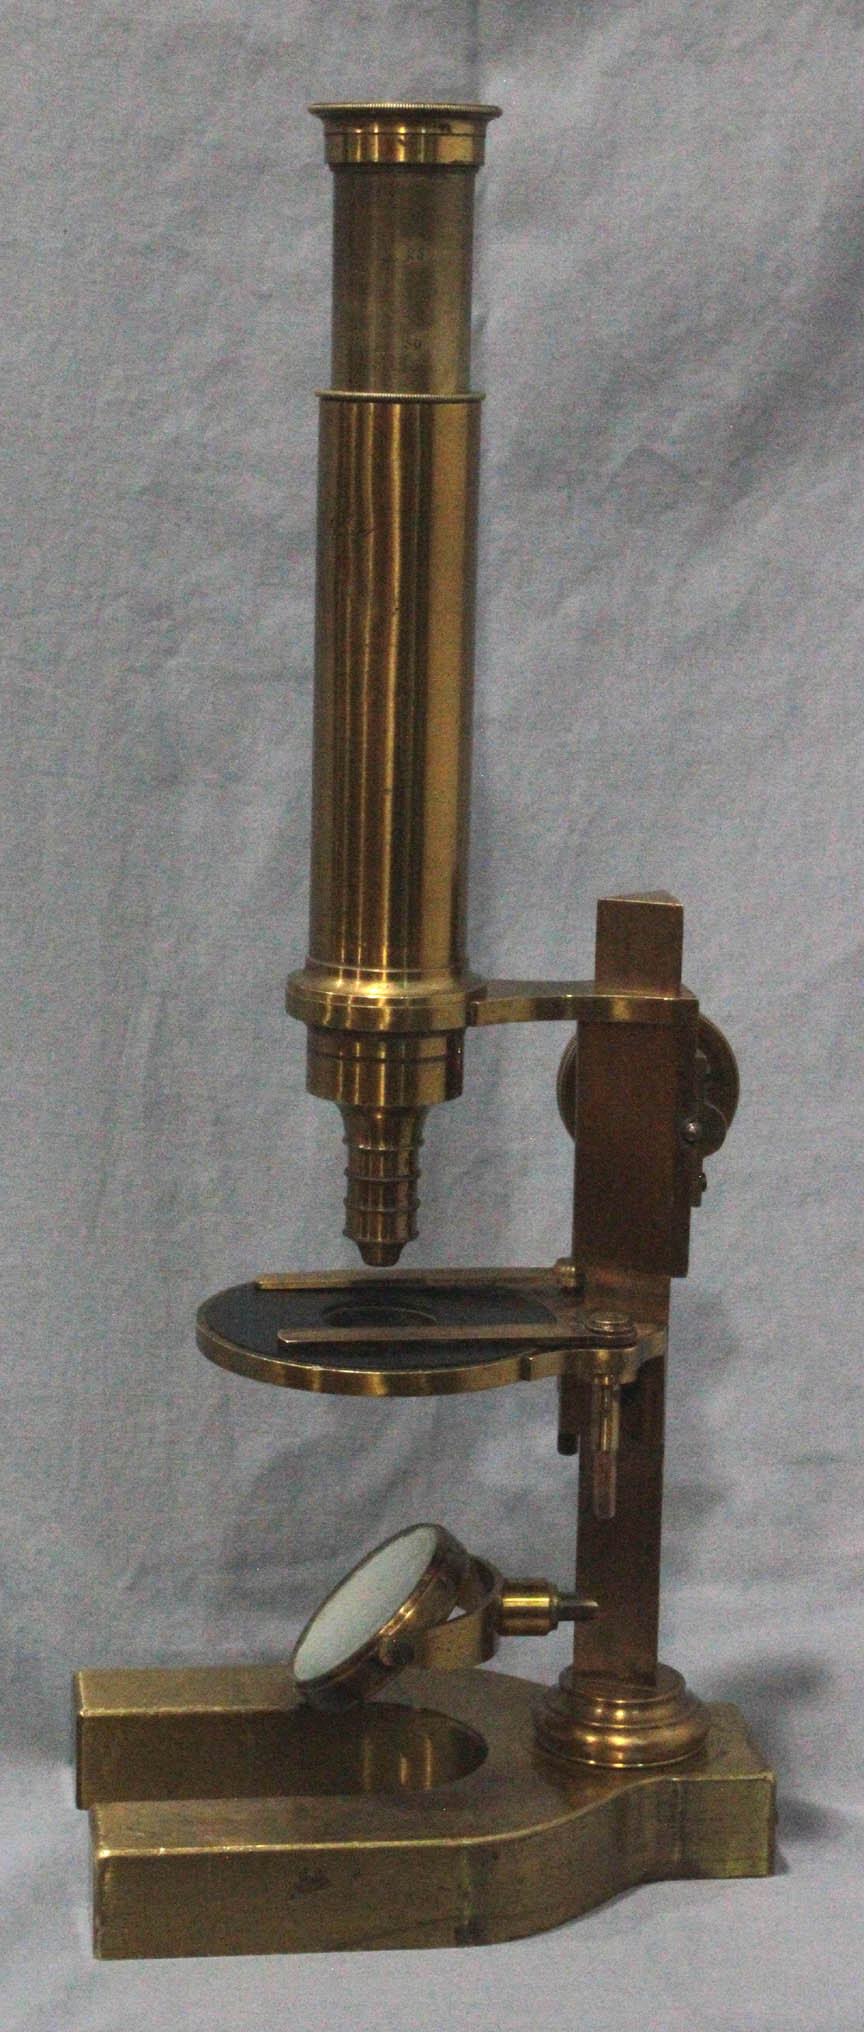 plossl Microscope